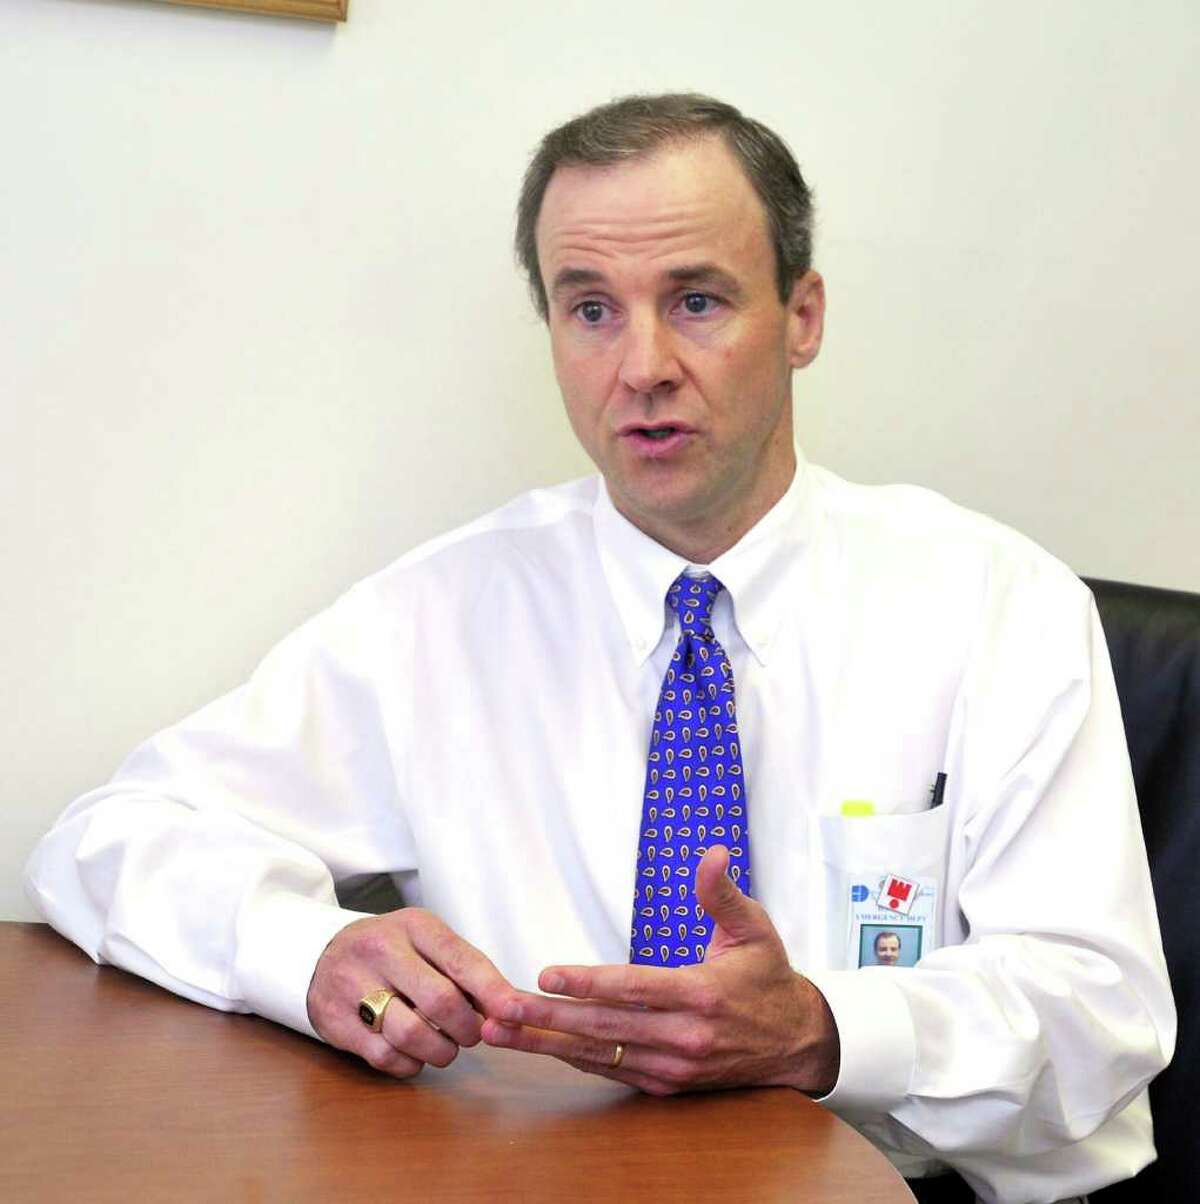 Dr. William Begg talks about pediatric trauma at Danbury Hospital, Tuesday, Aug. 17, 2010.